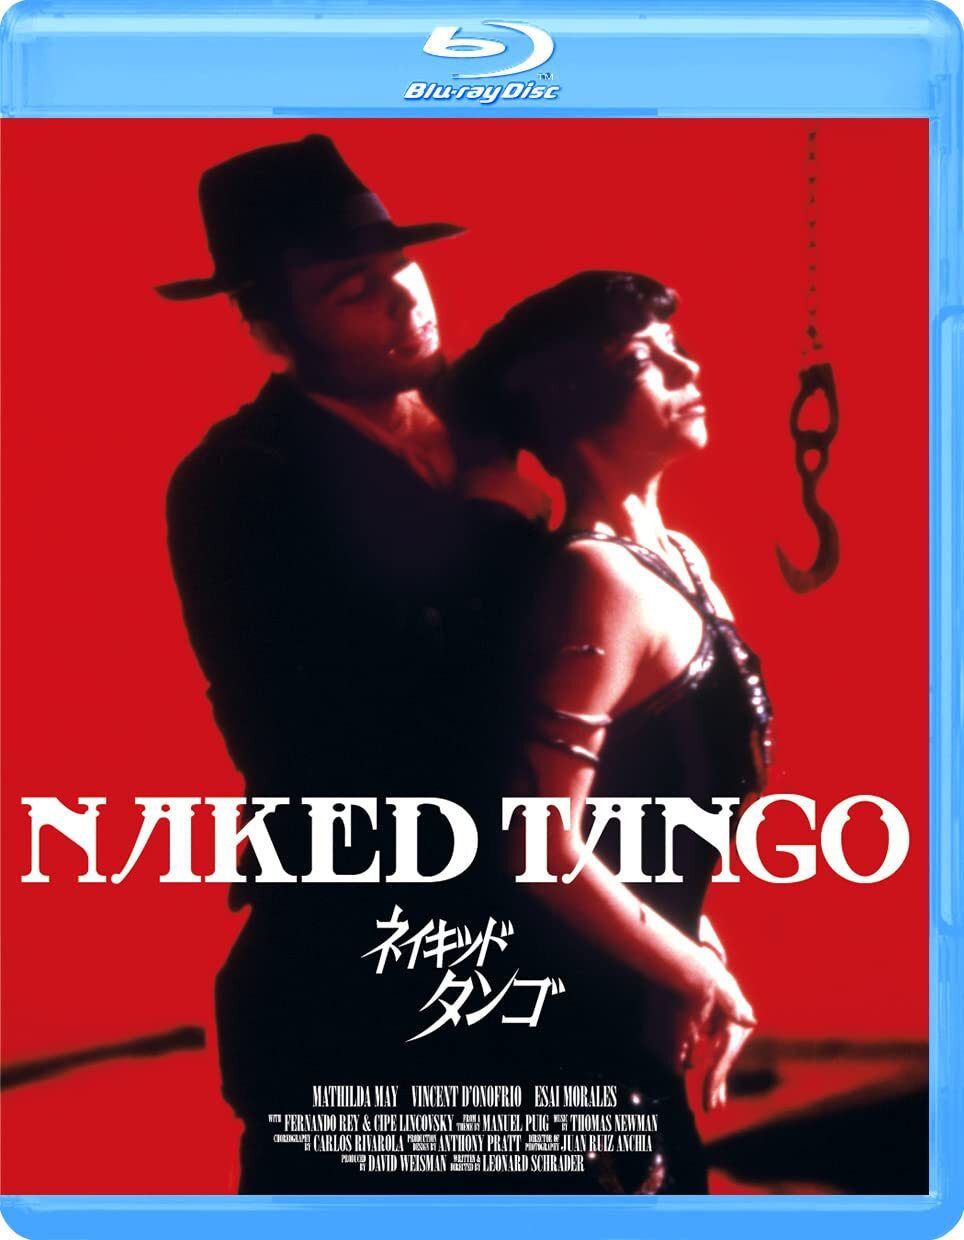 Naked Tango Blu-ray (ネイキッド・タンゴ) (Japan)